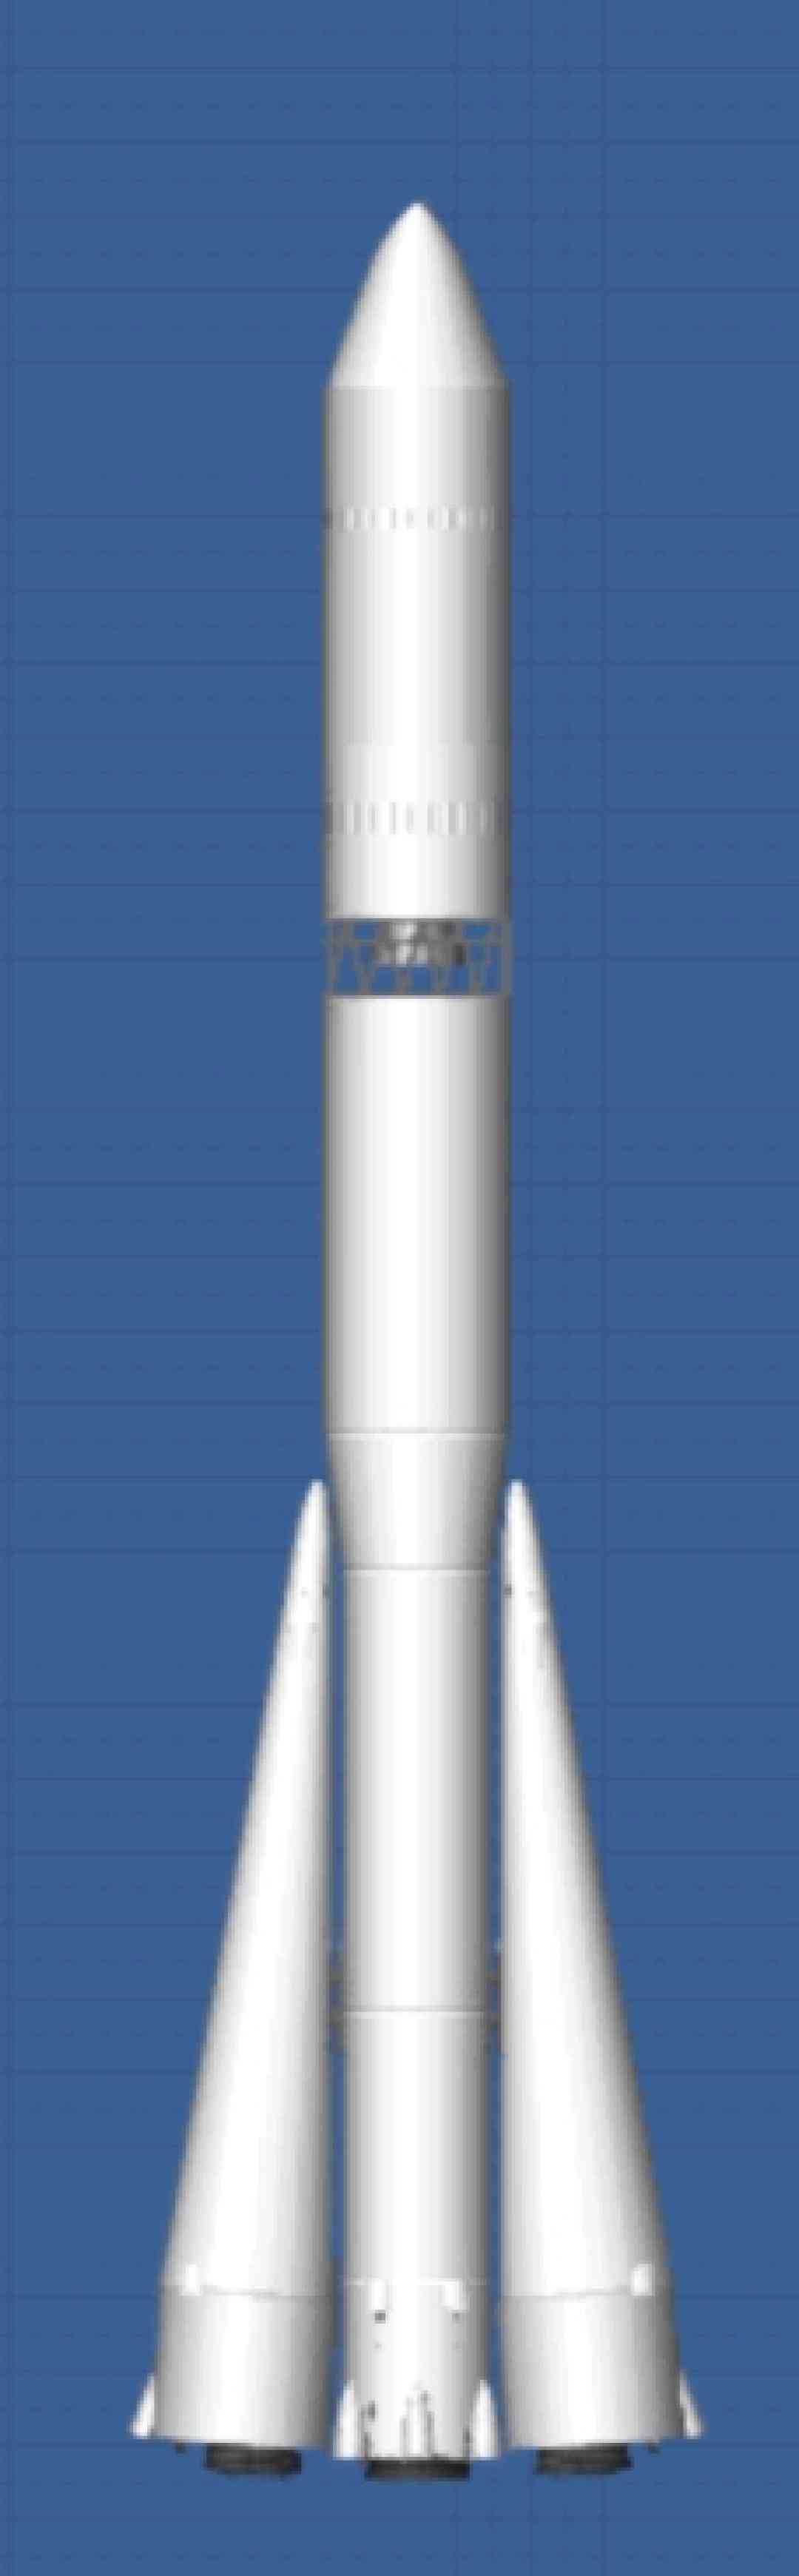 Vostok for Spaceflight Simulator • SFS UNIVERSE